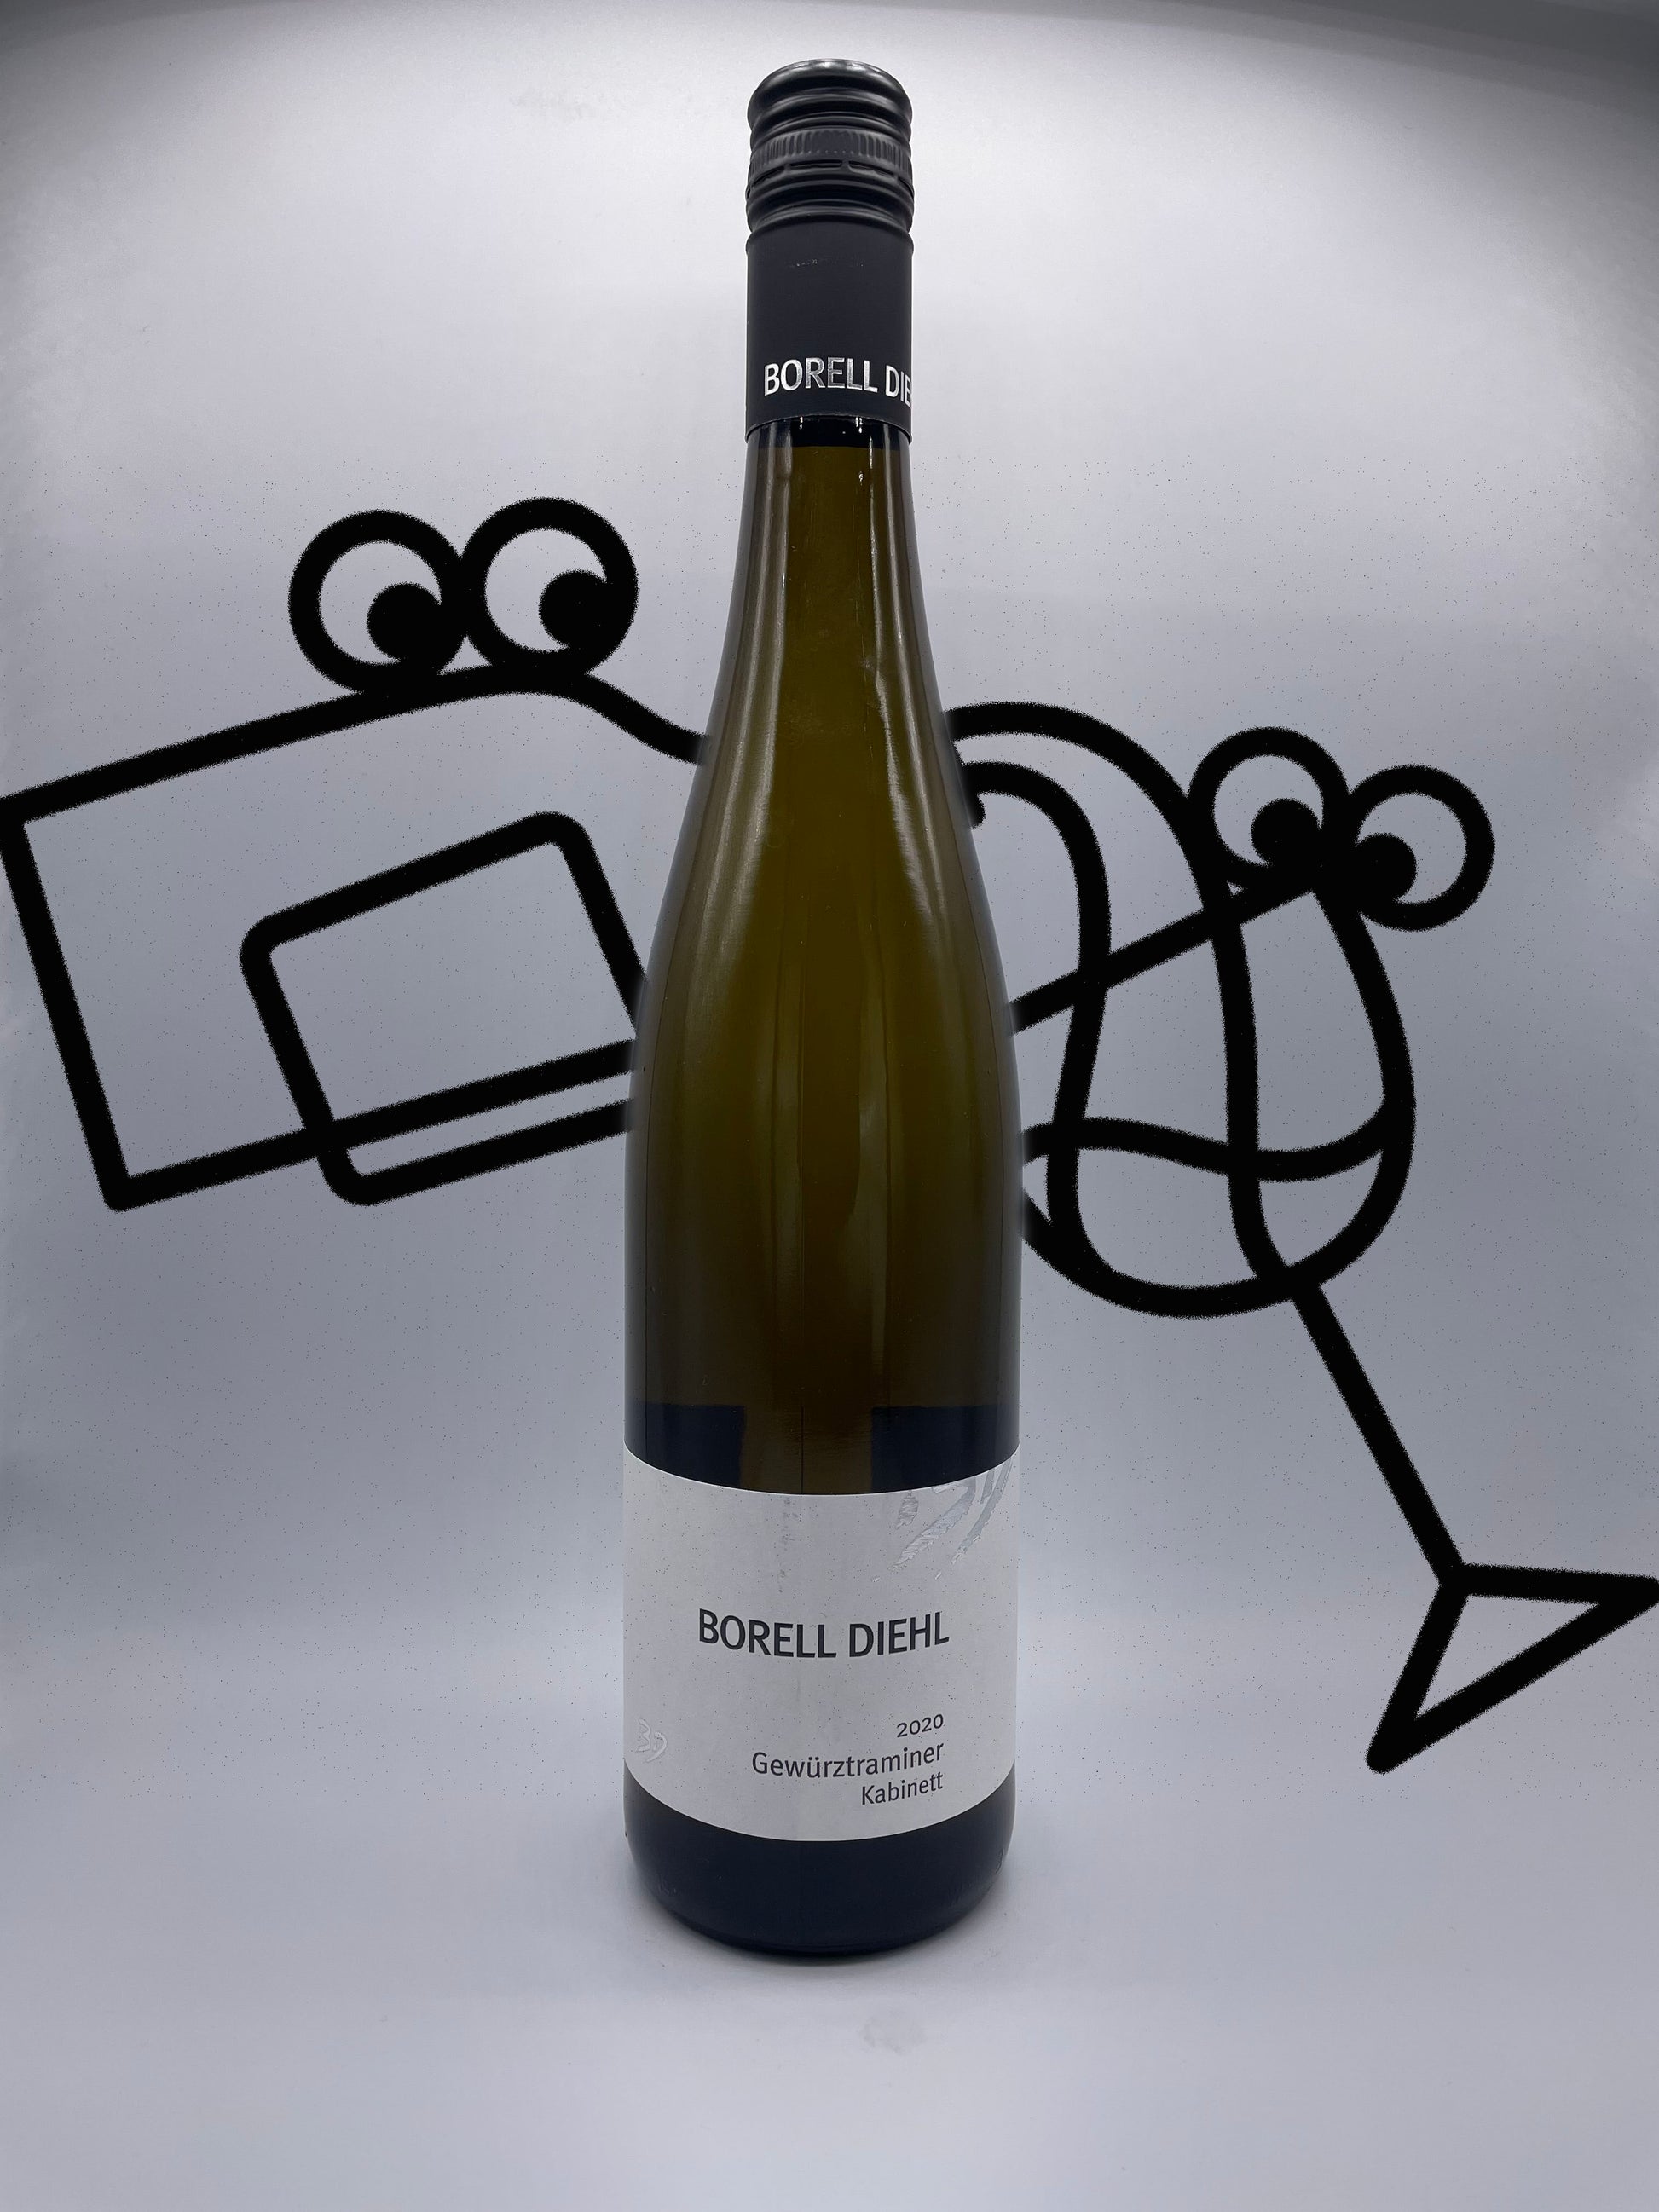 Borell-Diehl Gewurztraminer Kabinett Pfalz, Germany Williston Park Wines